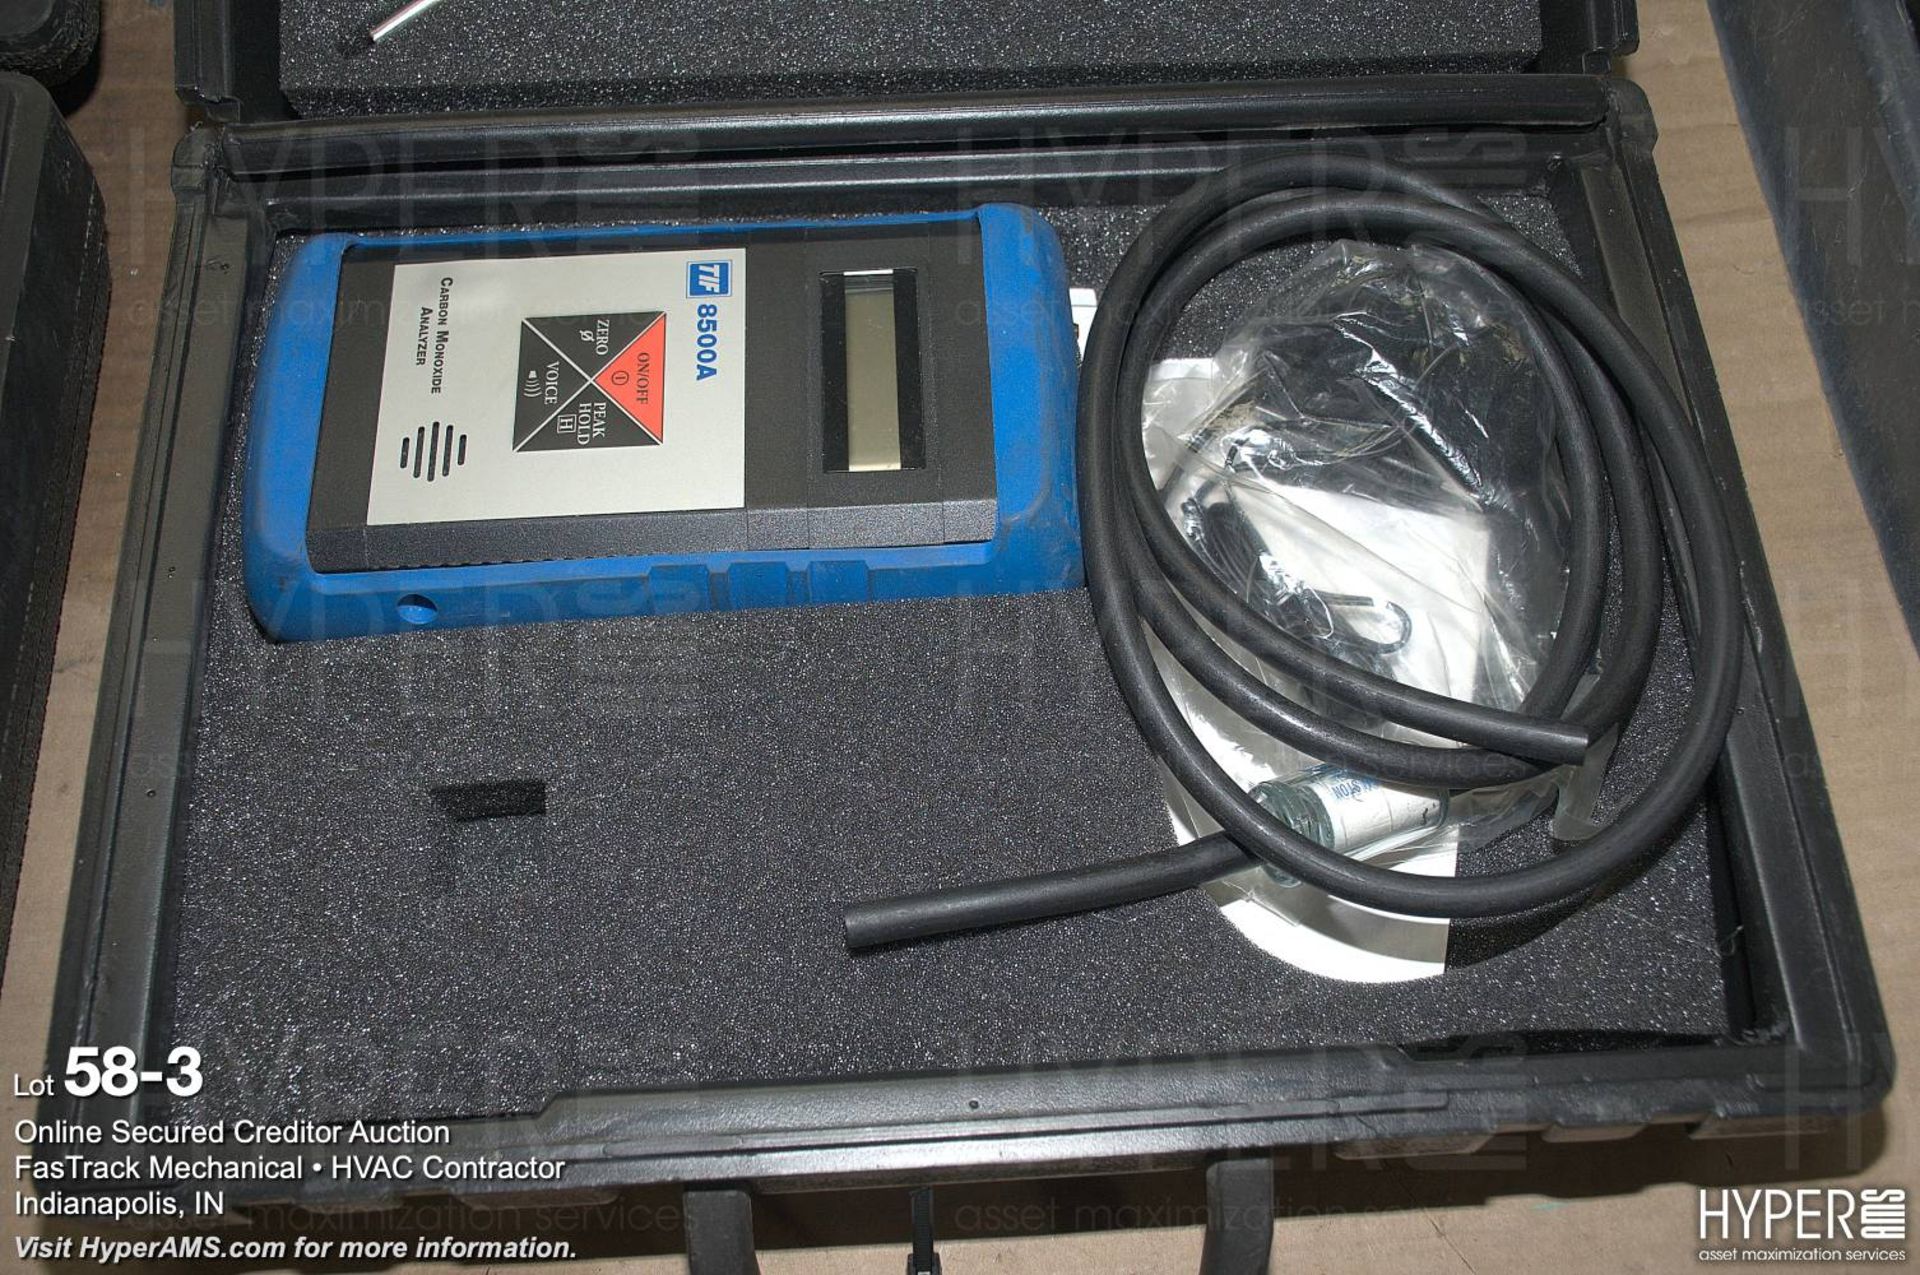 Kane-May Carbon Monoxide analyzer - Image 3 of 3